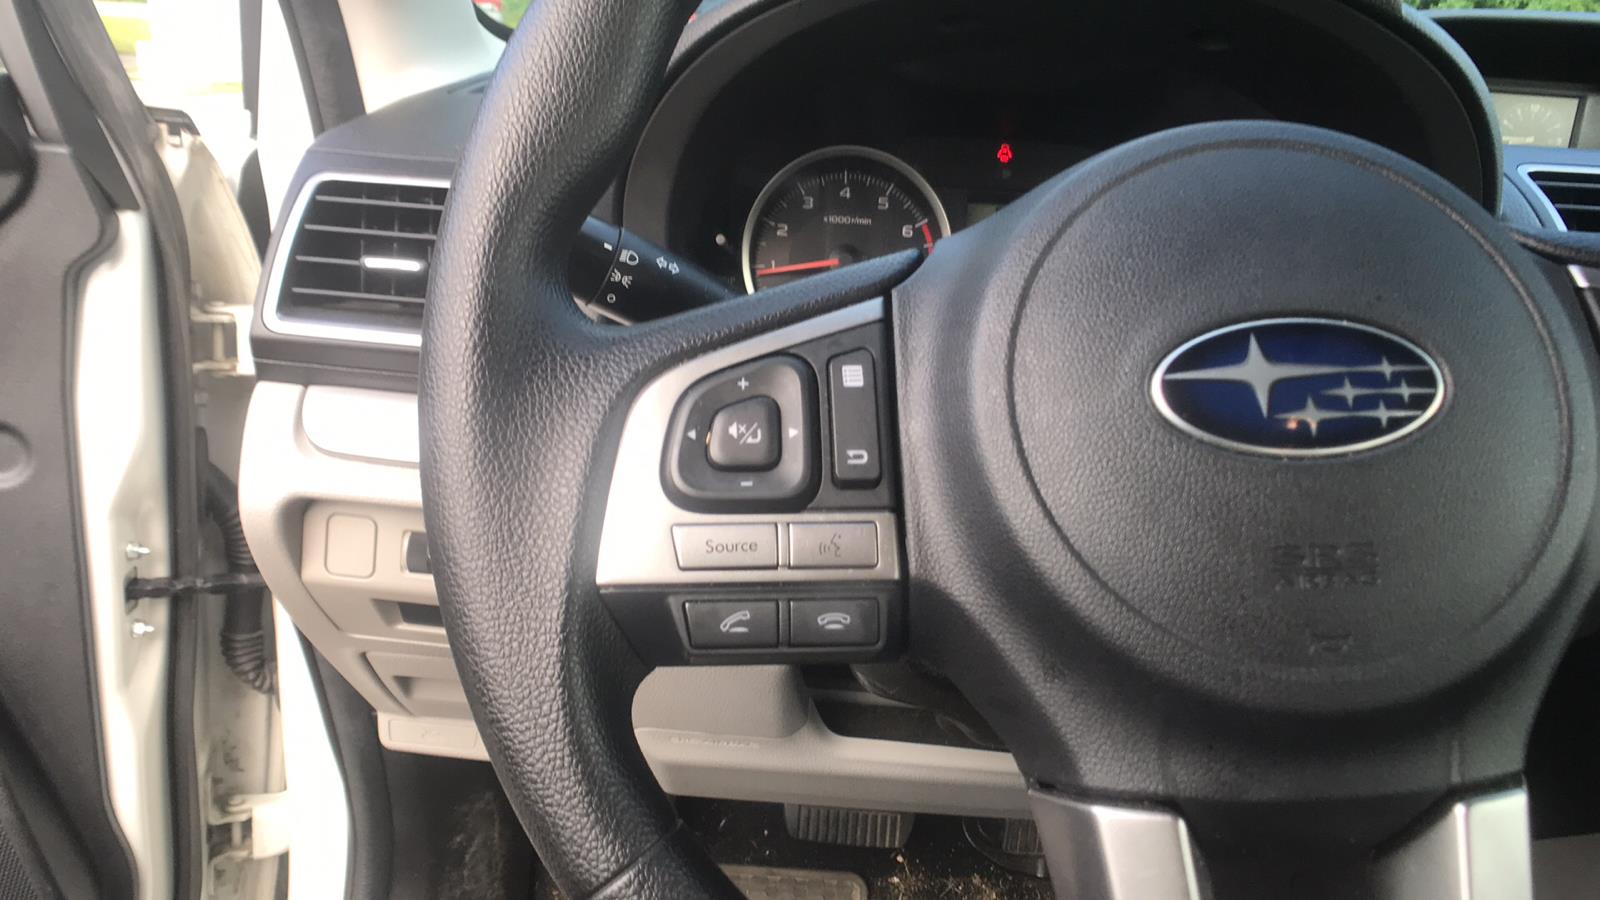 2018 Subaru Forester Sport Utility